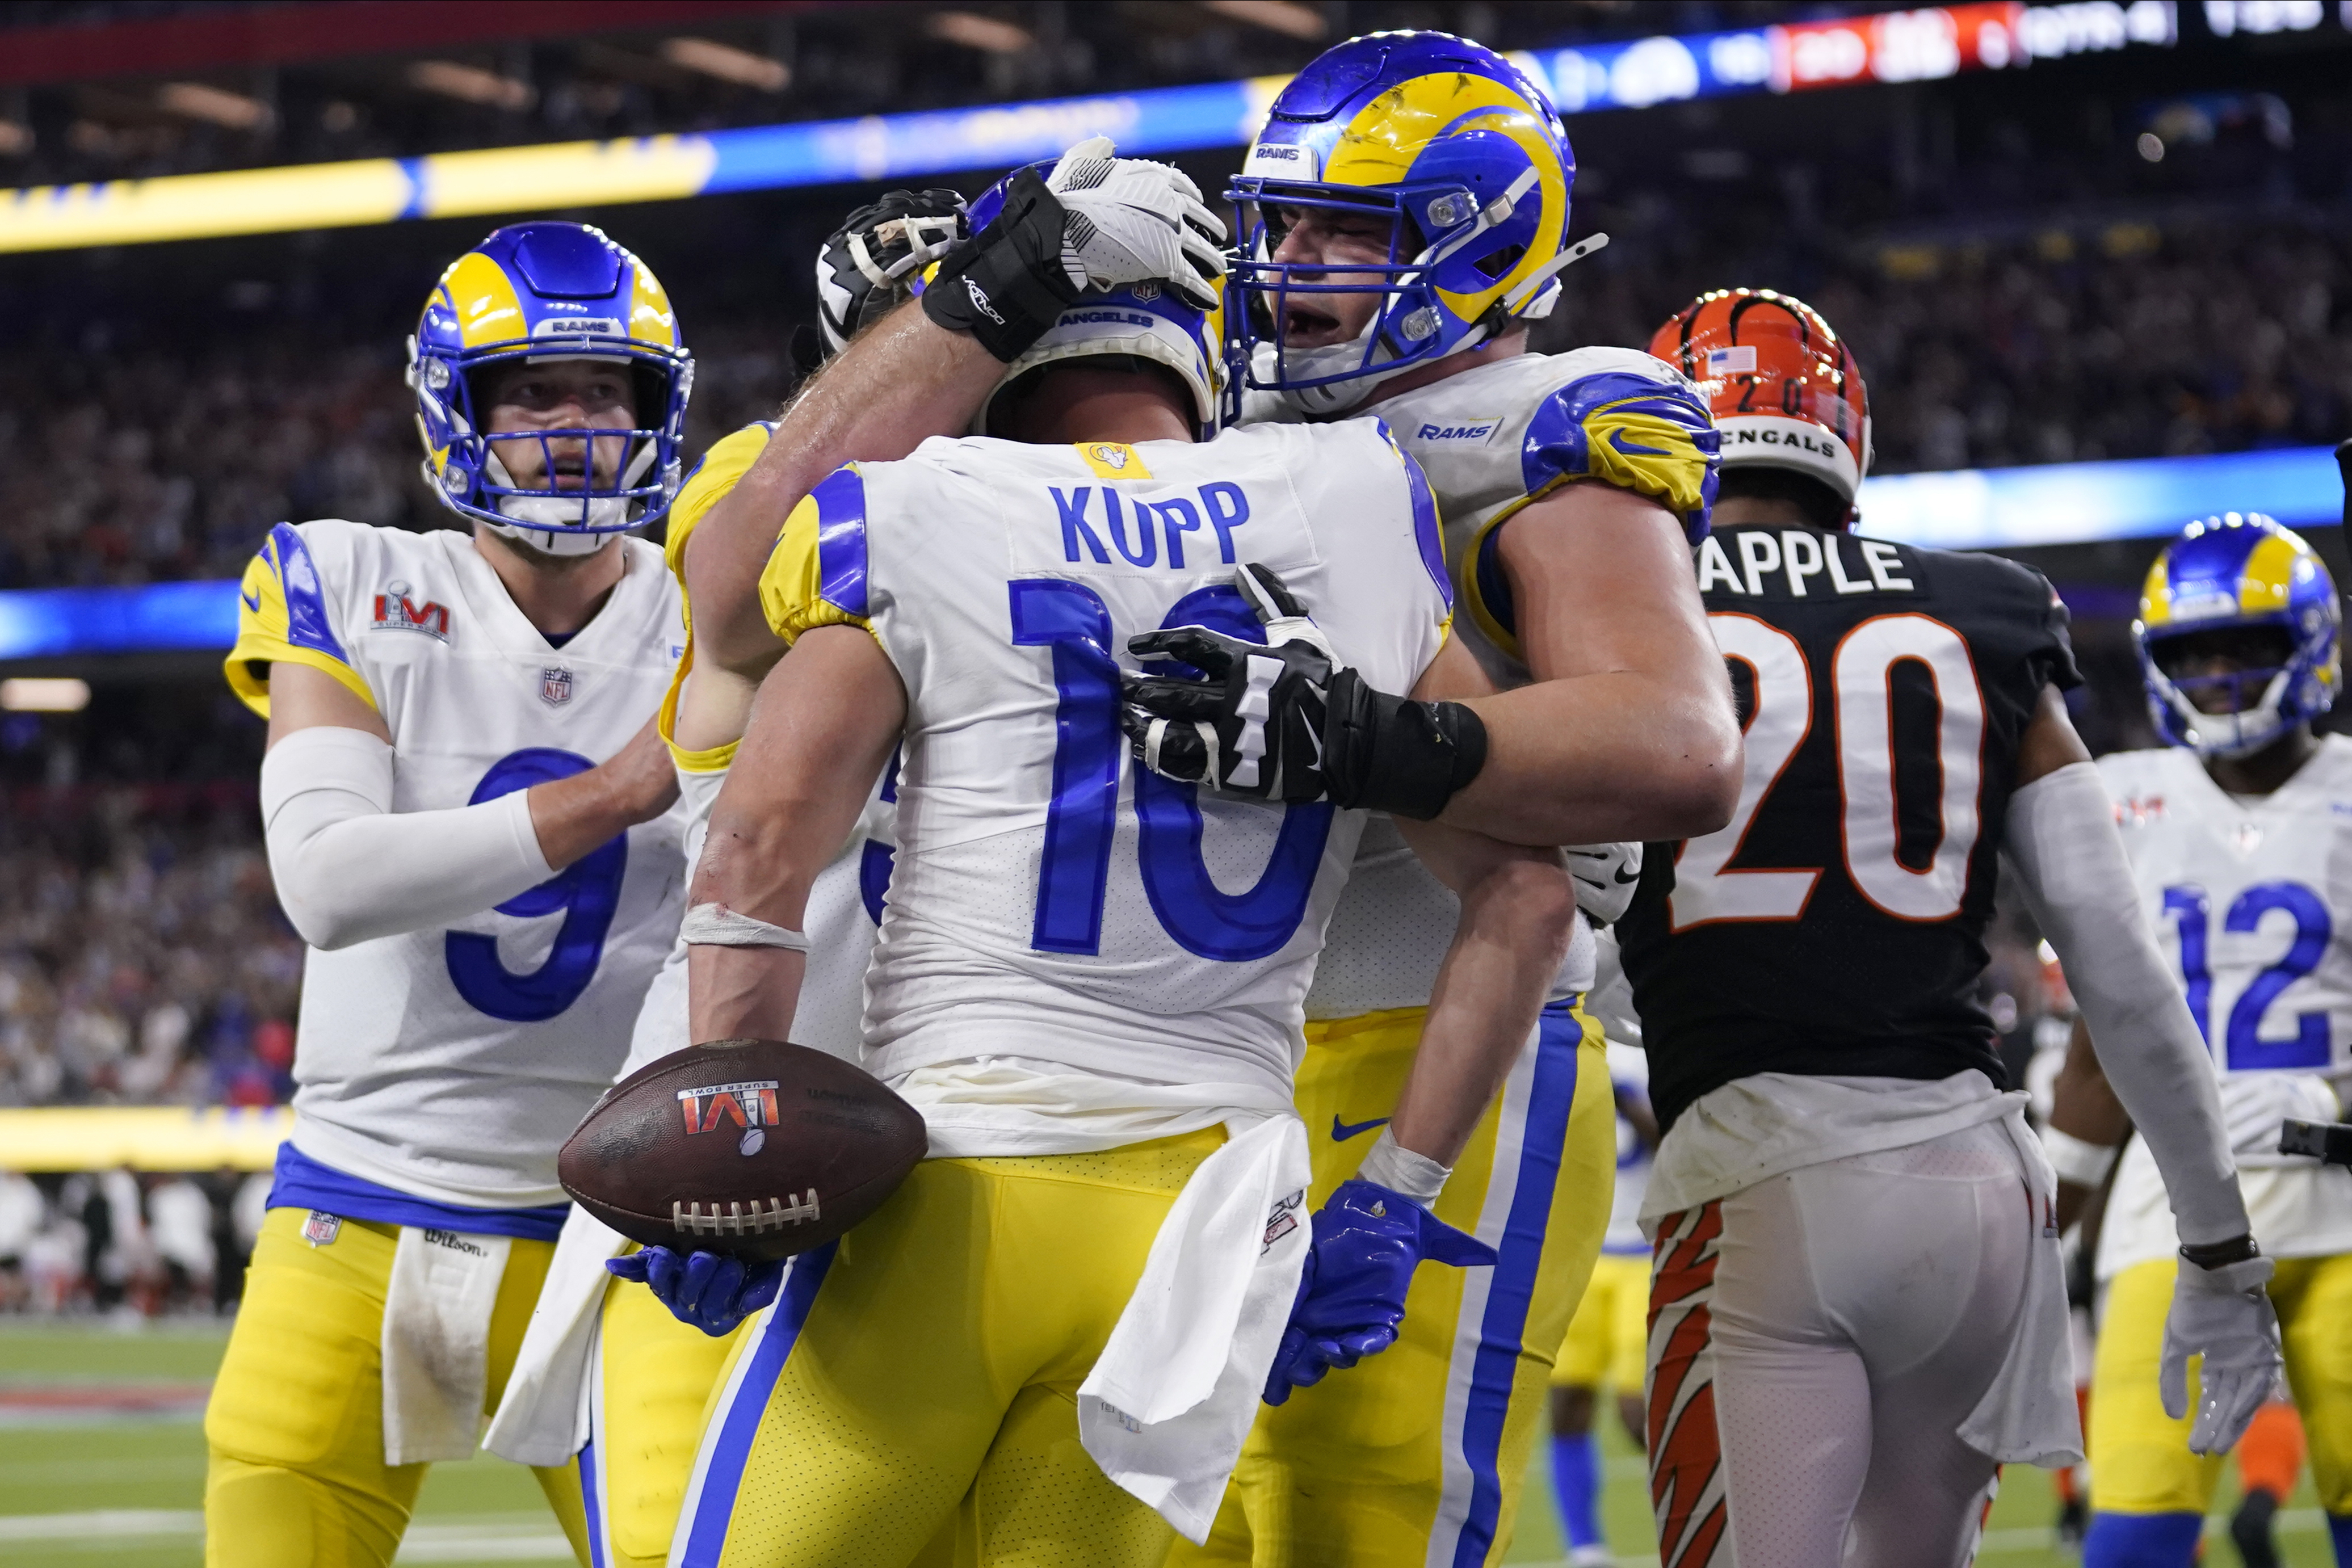 2022 Super Bowl rosters: Matthew Stafford, Joe Burrow headline players for  Super Bowl 56 between Rams, Bengals 